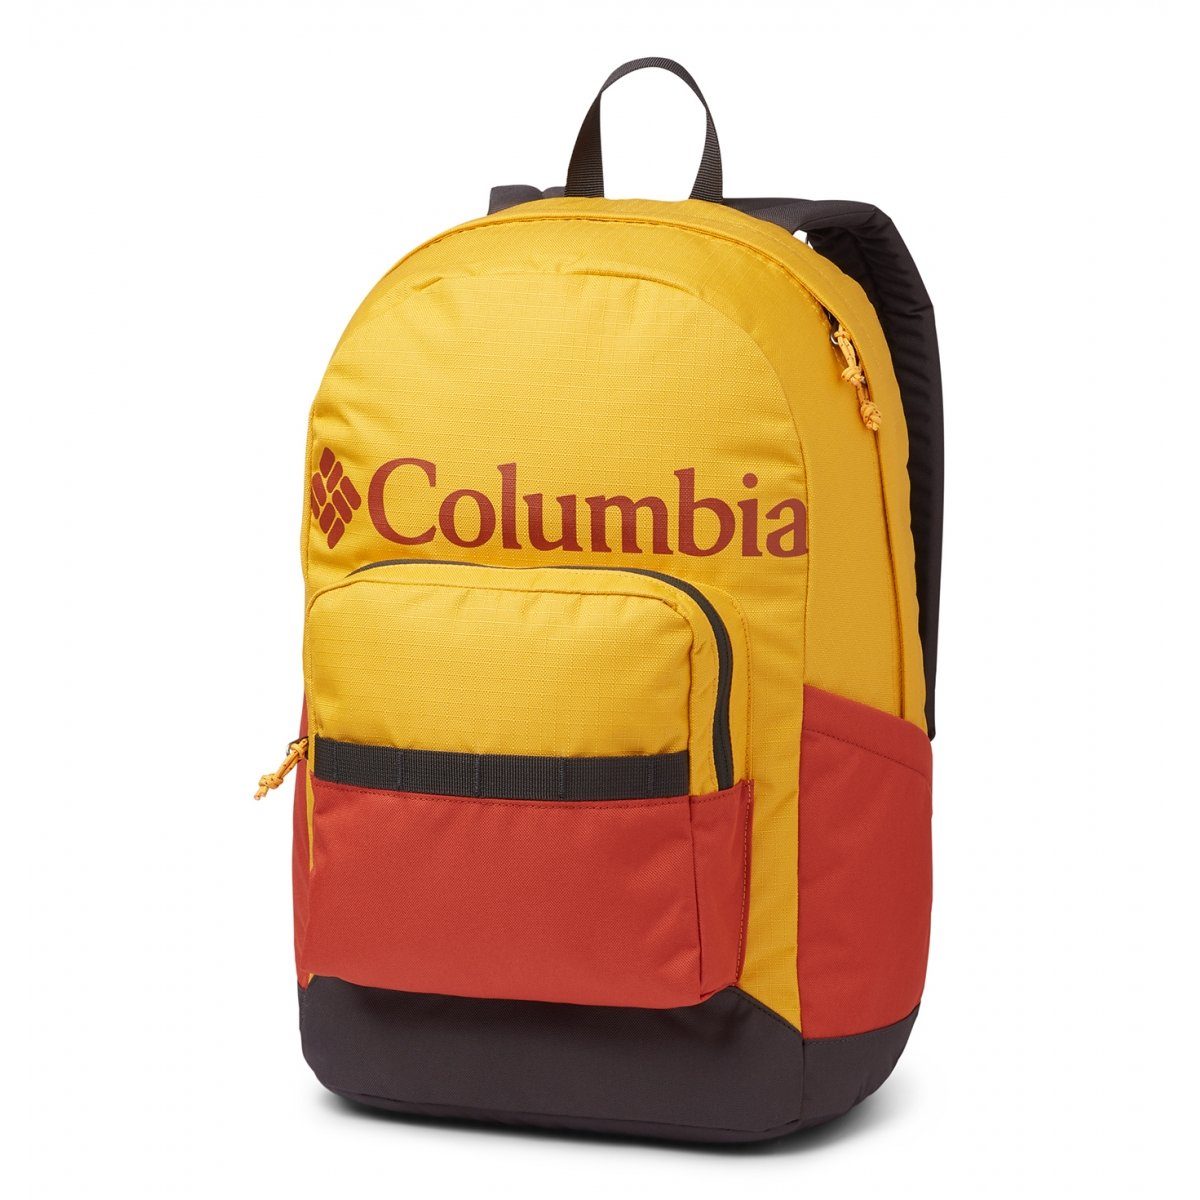 Columbia Daypack Herren Zigzag 22L Backpack - 790 Bright Gold, Carnelian Red / -